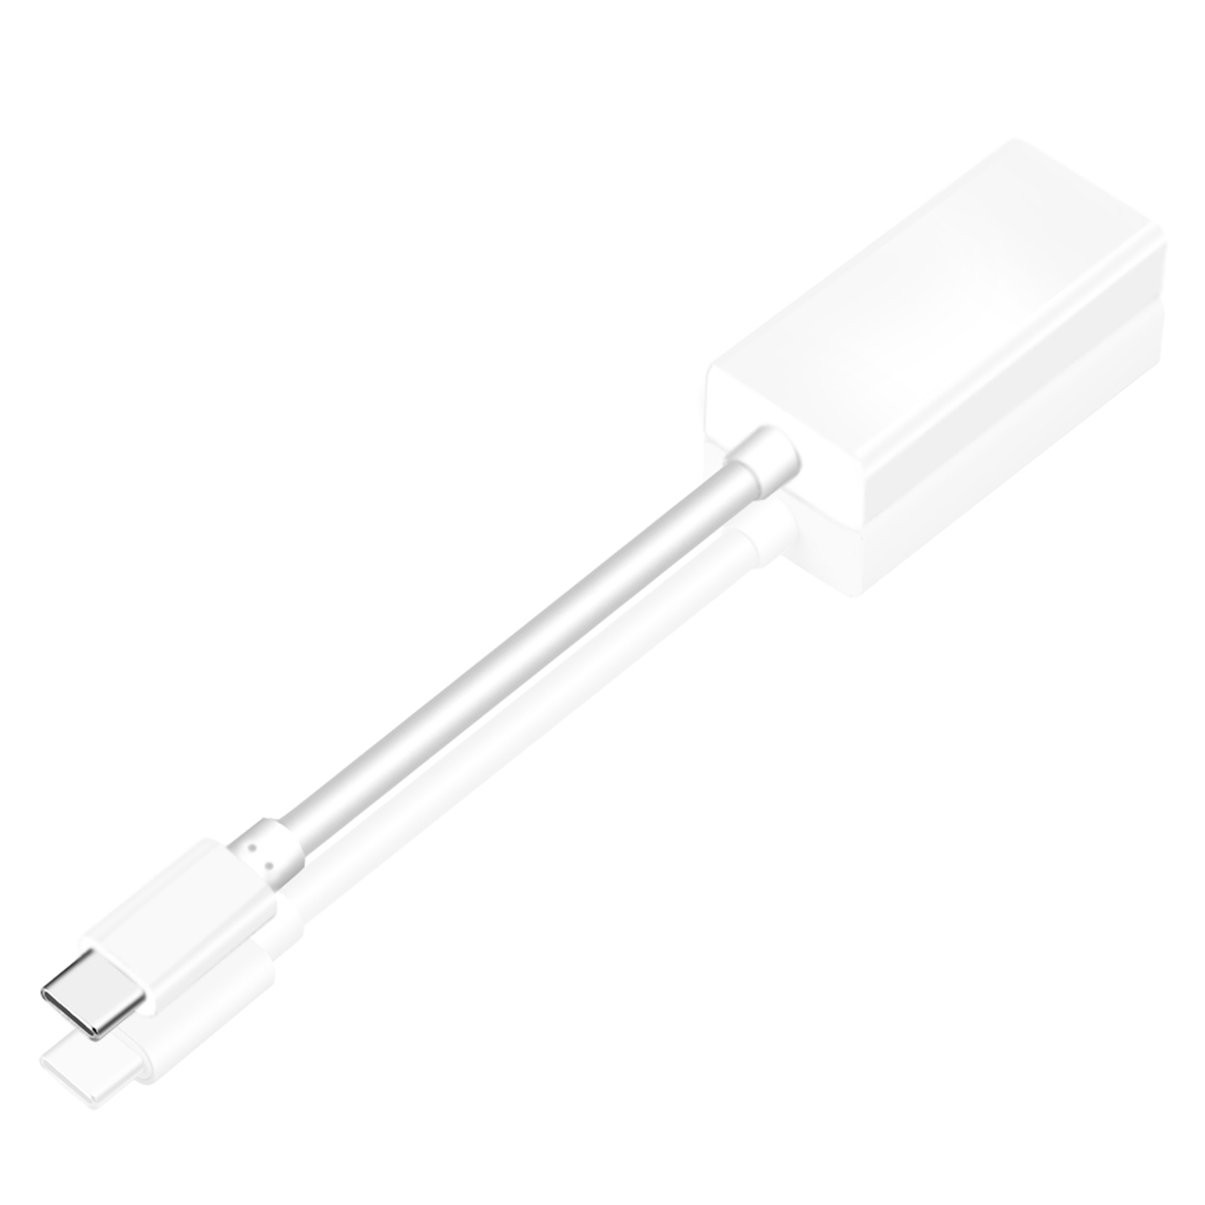 USB-C to Mini Display Port Adapter USB 3.1 Type C (Thunderbolt 3) to Thunderbolt 2 Adapter For MacBook Pro